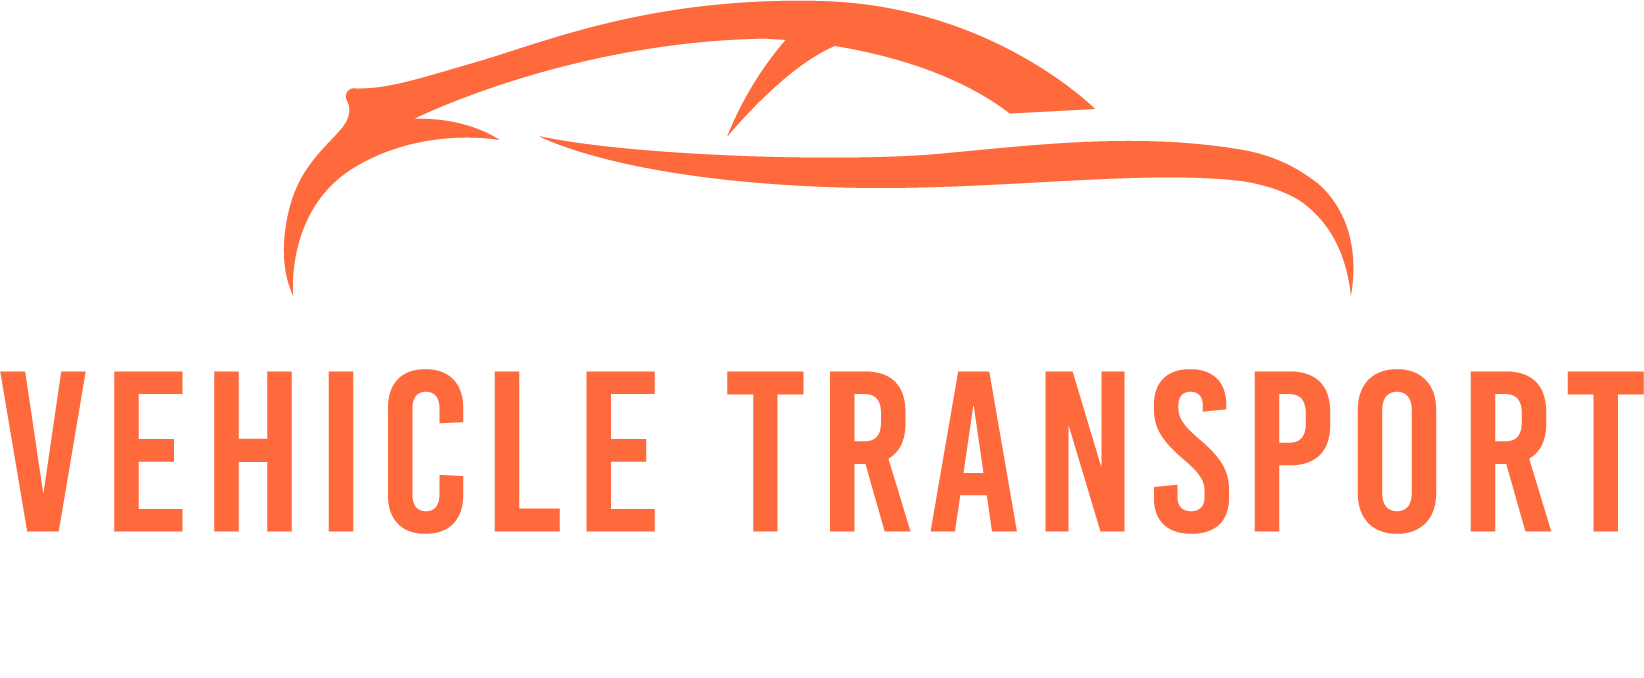 Vehicle Transport Australia